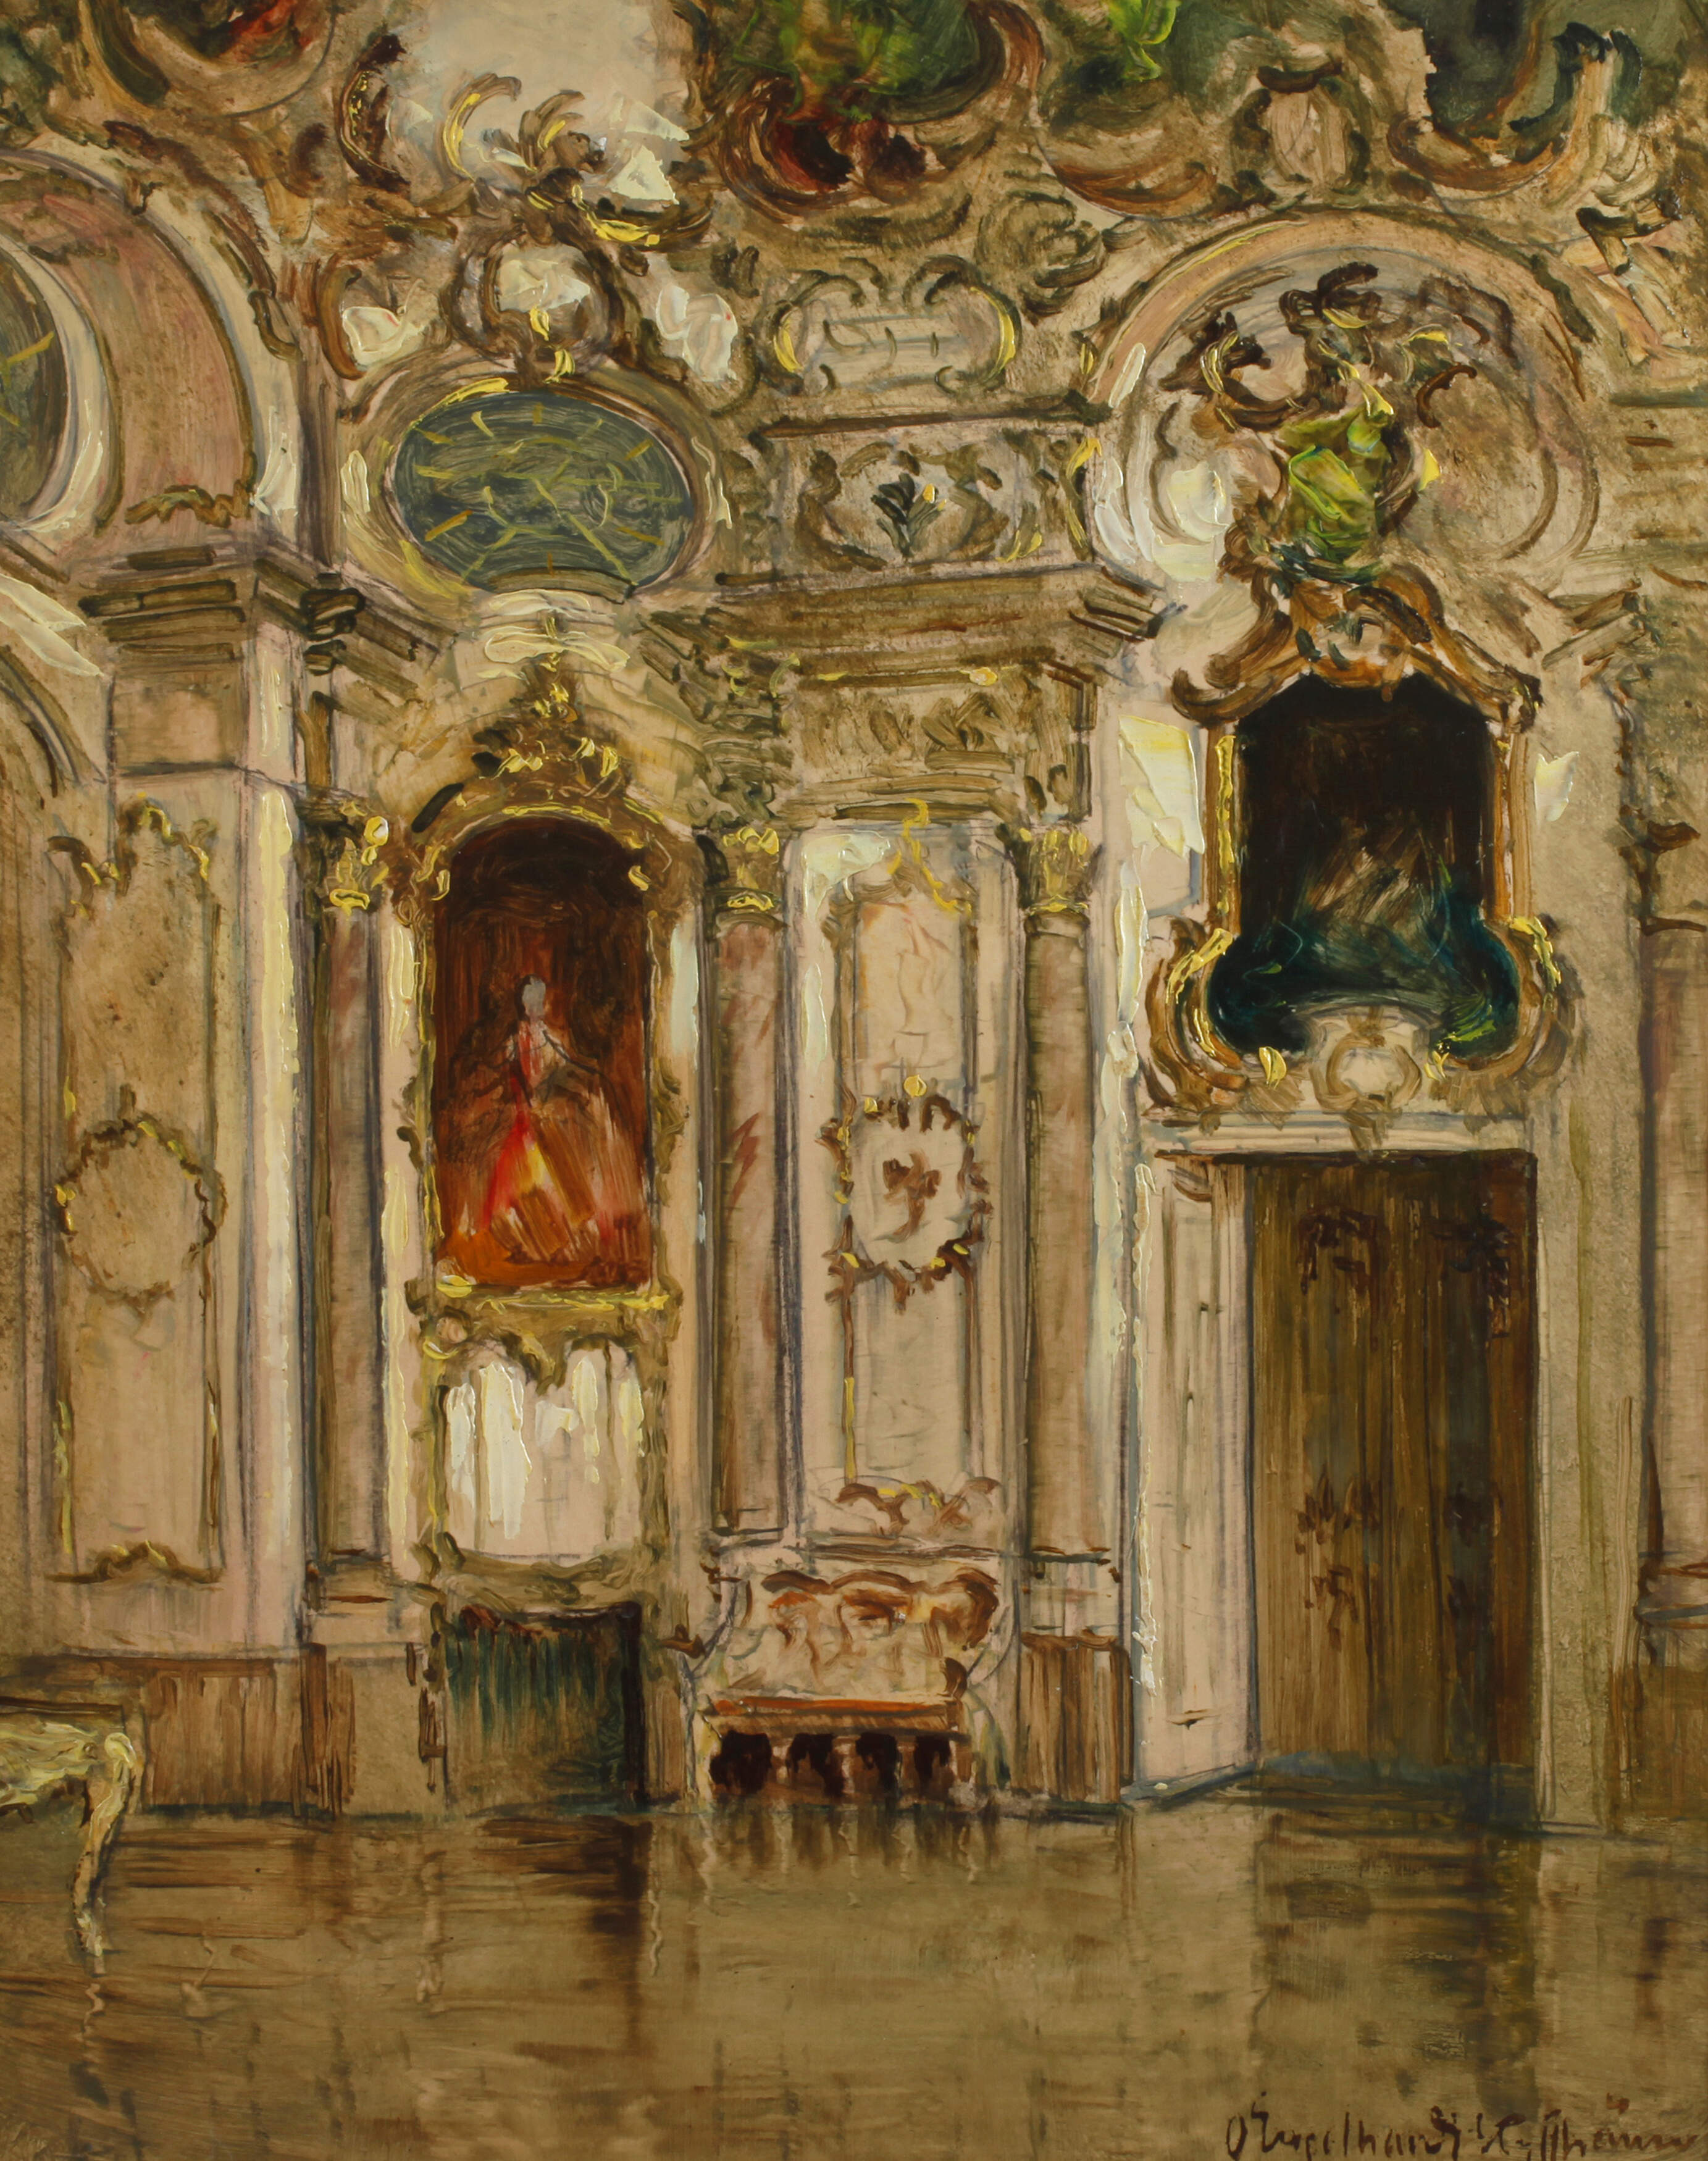 Otto Engelhardt-Kyffhäuser, "Barocksaal"